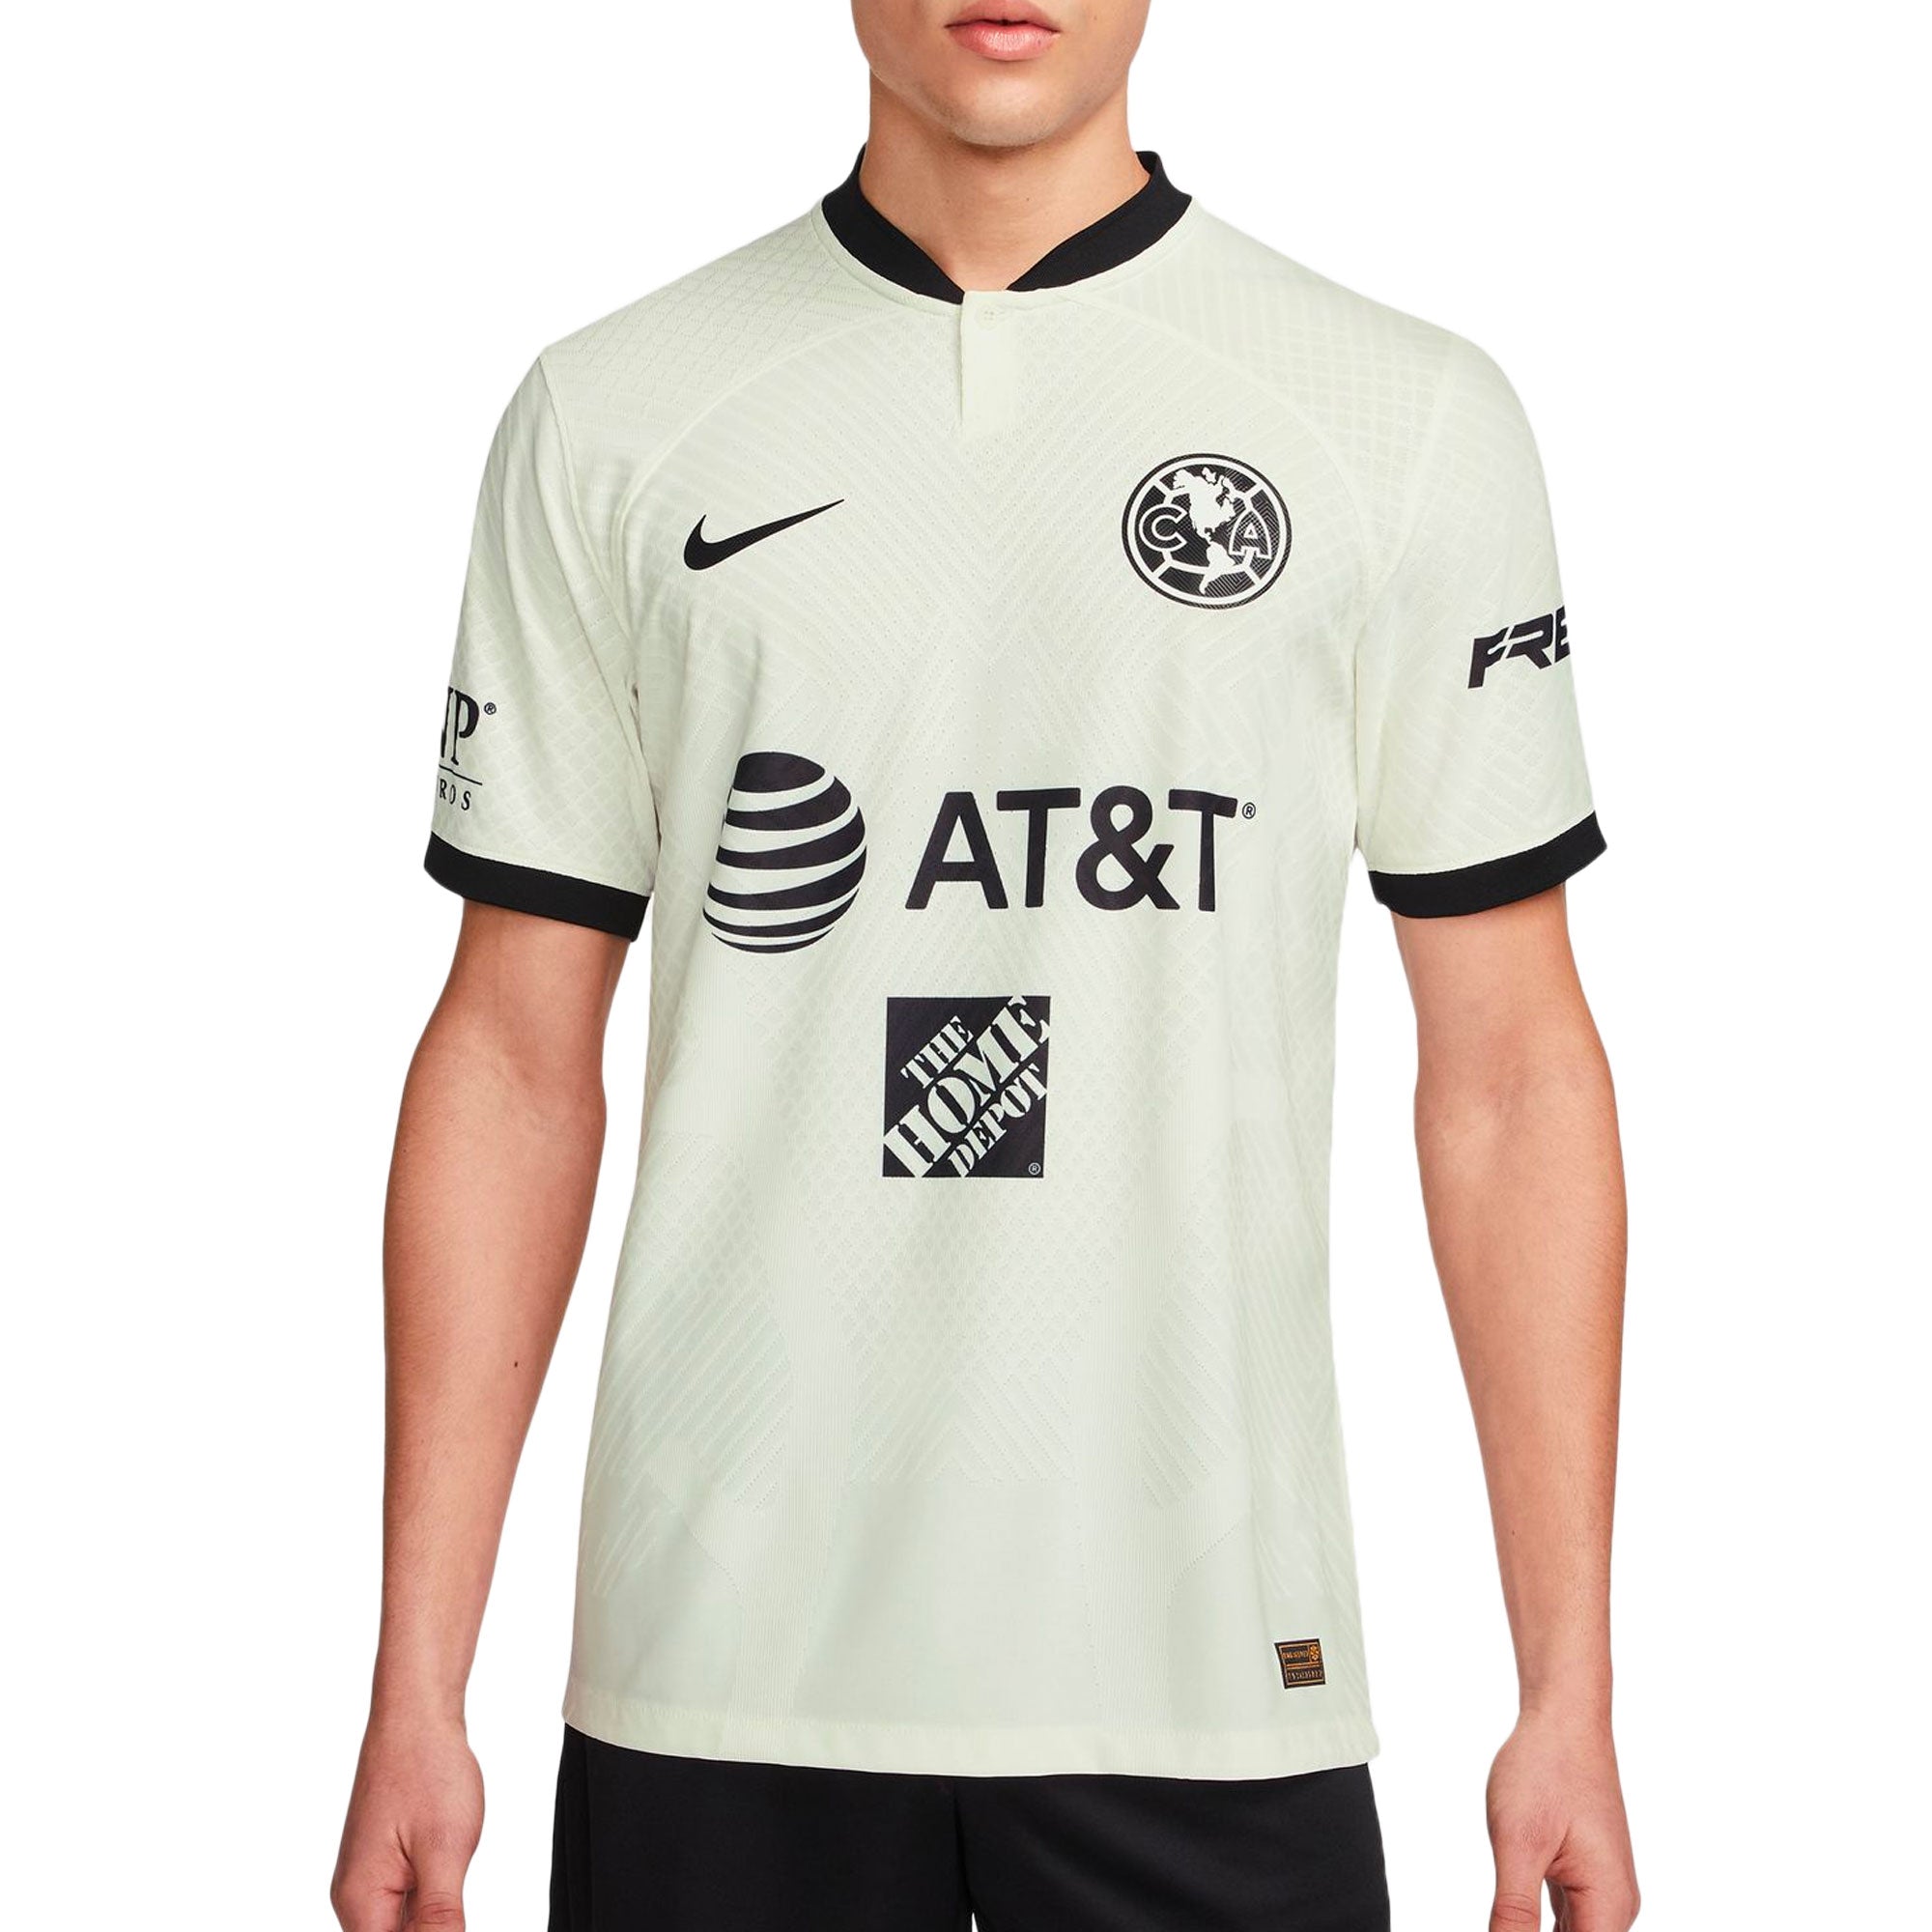 Nike F.C. Home Soccer Jersey - White/Black/Metallic Gold